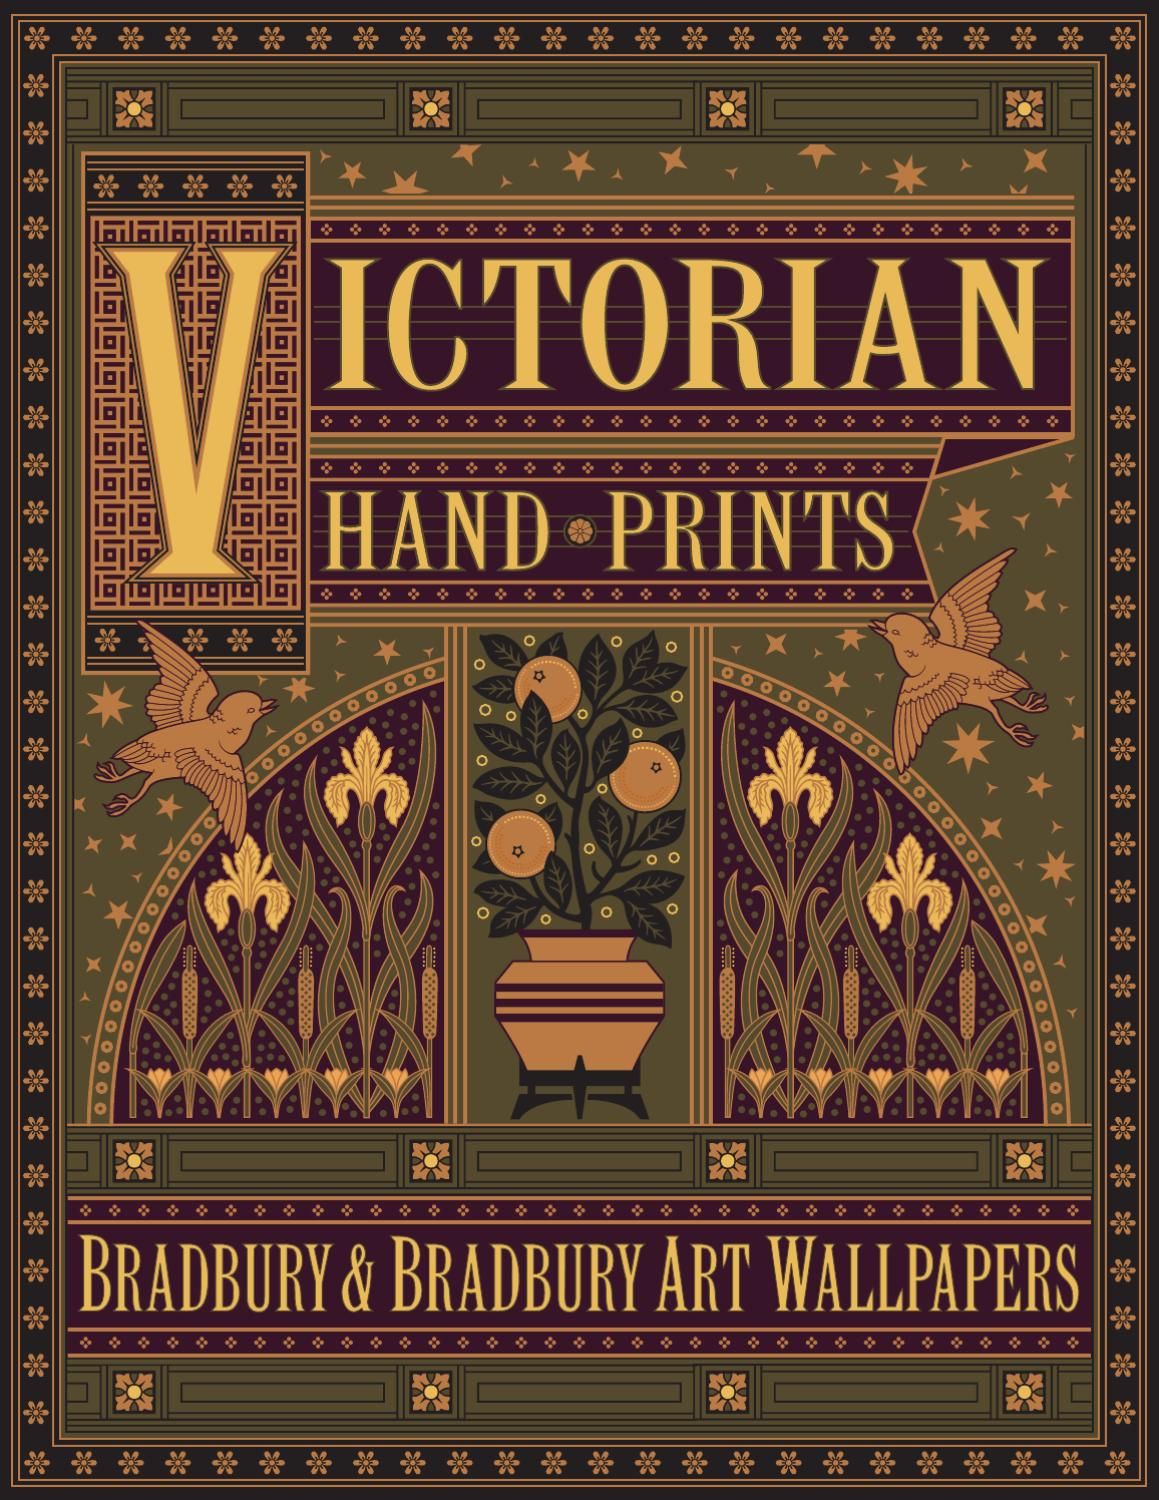 Bradbury & Bradbury Victorian Hand Prints Wallpaper Catalog By Bradbury & Bradbury Art Wallpaper